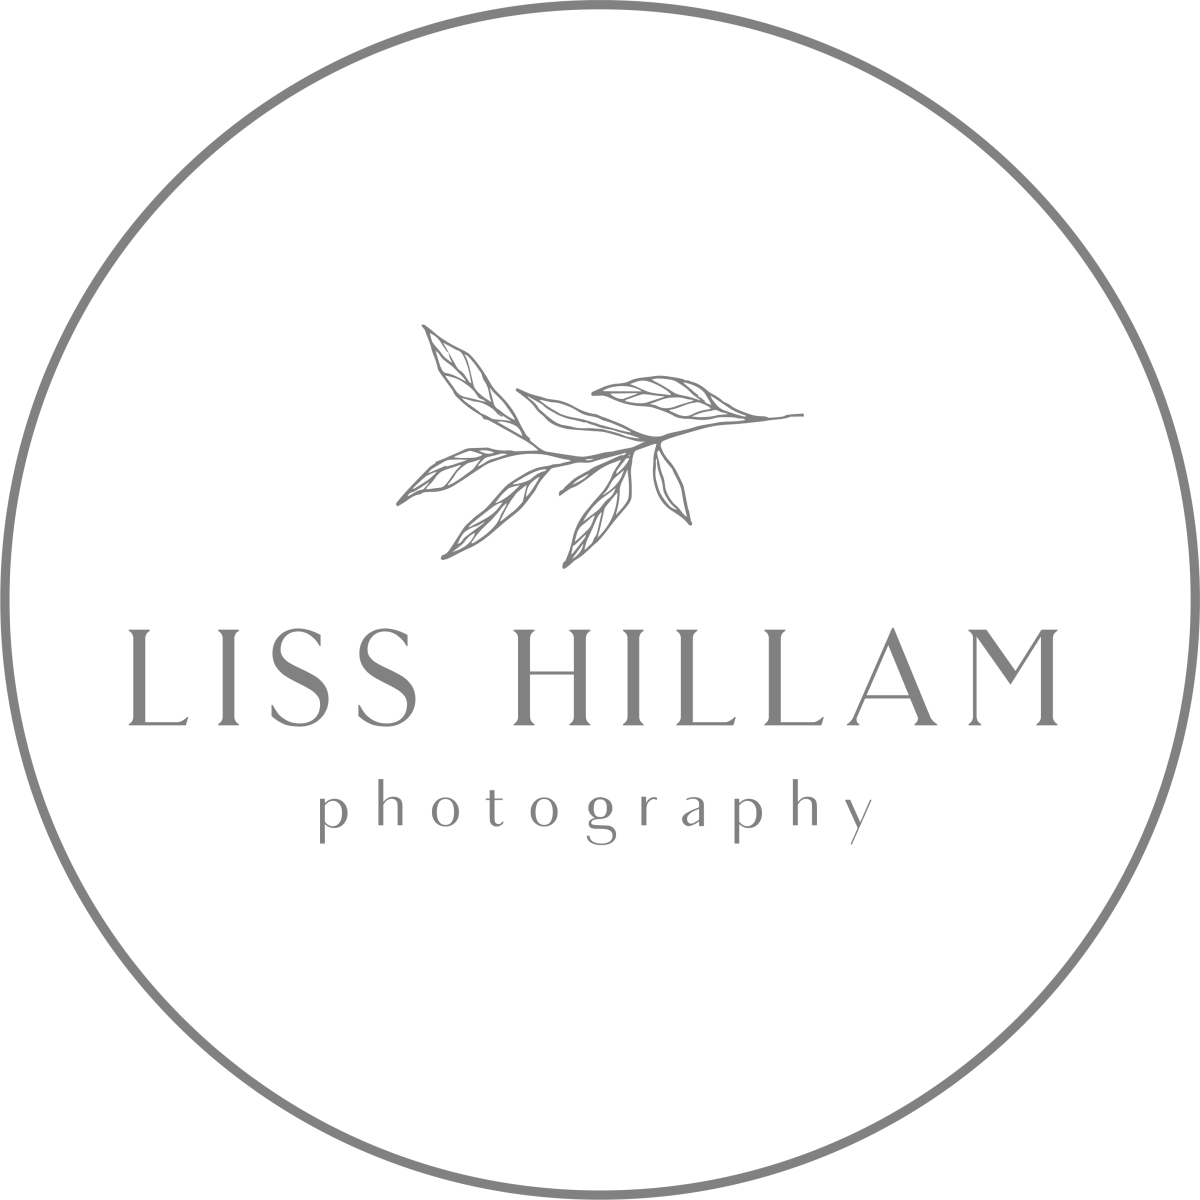 Liss Hillam Photography